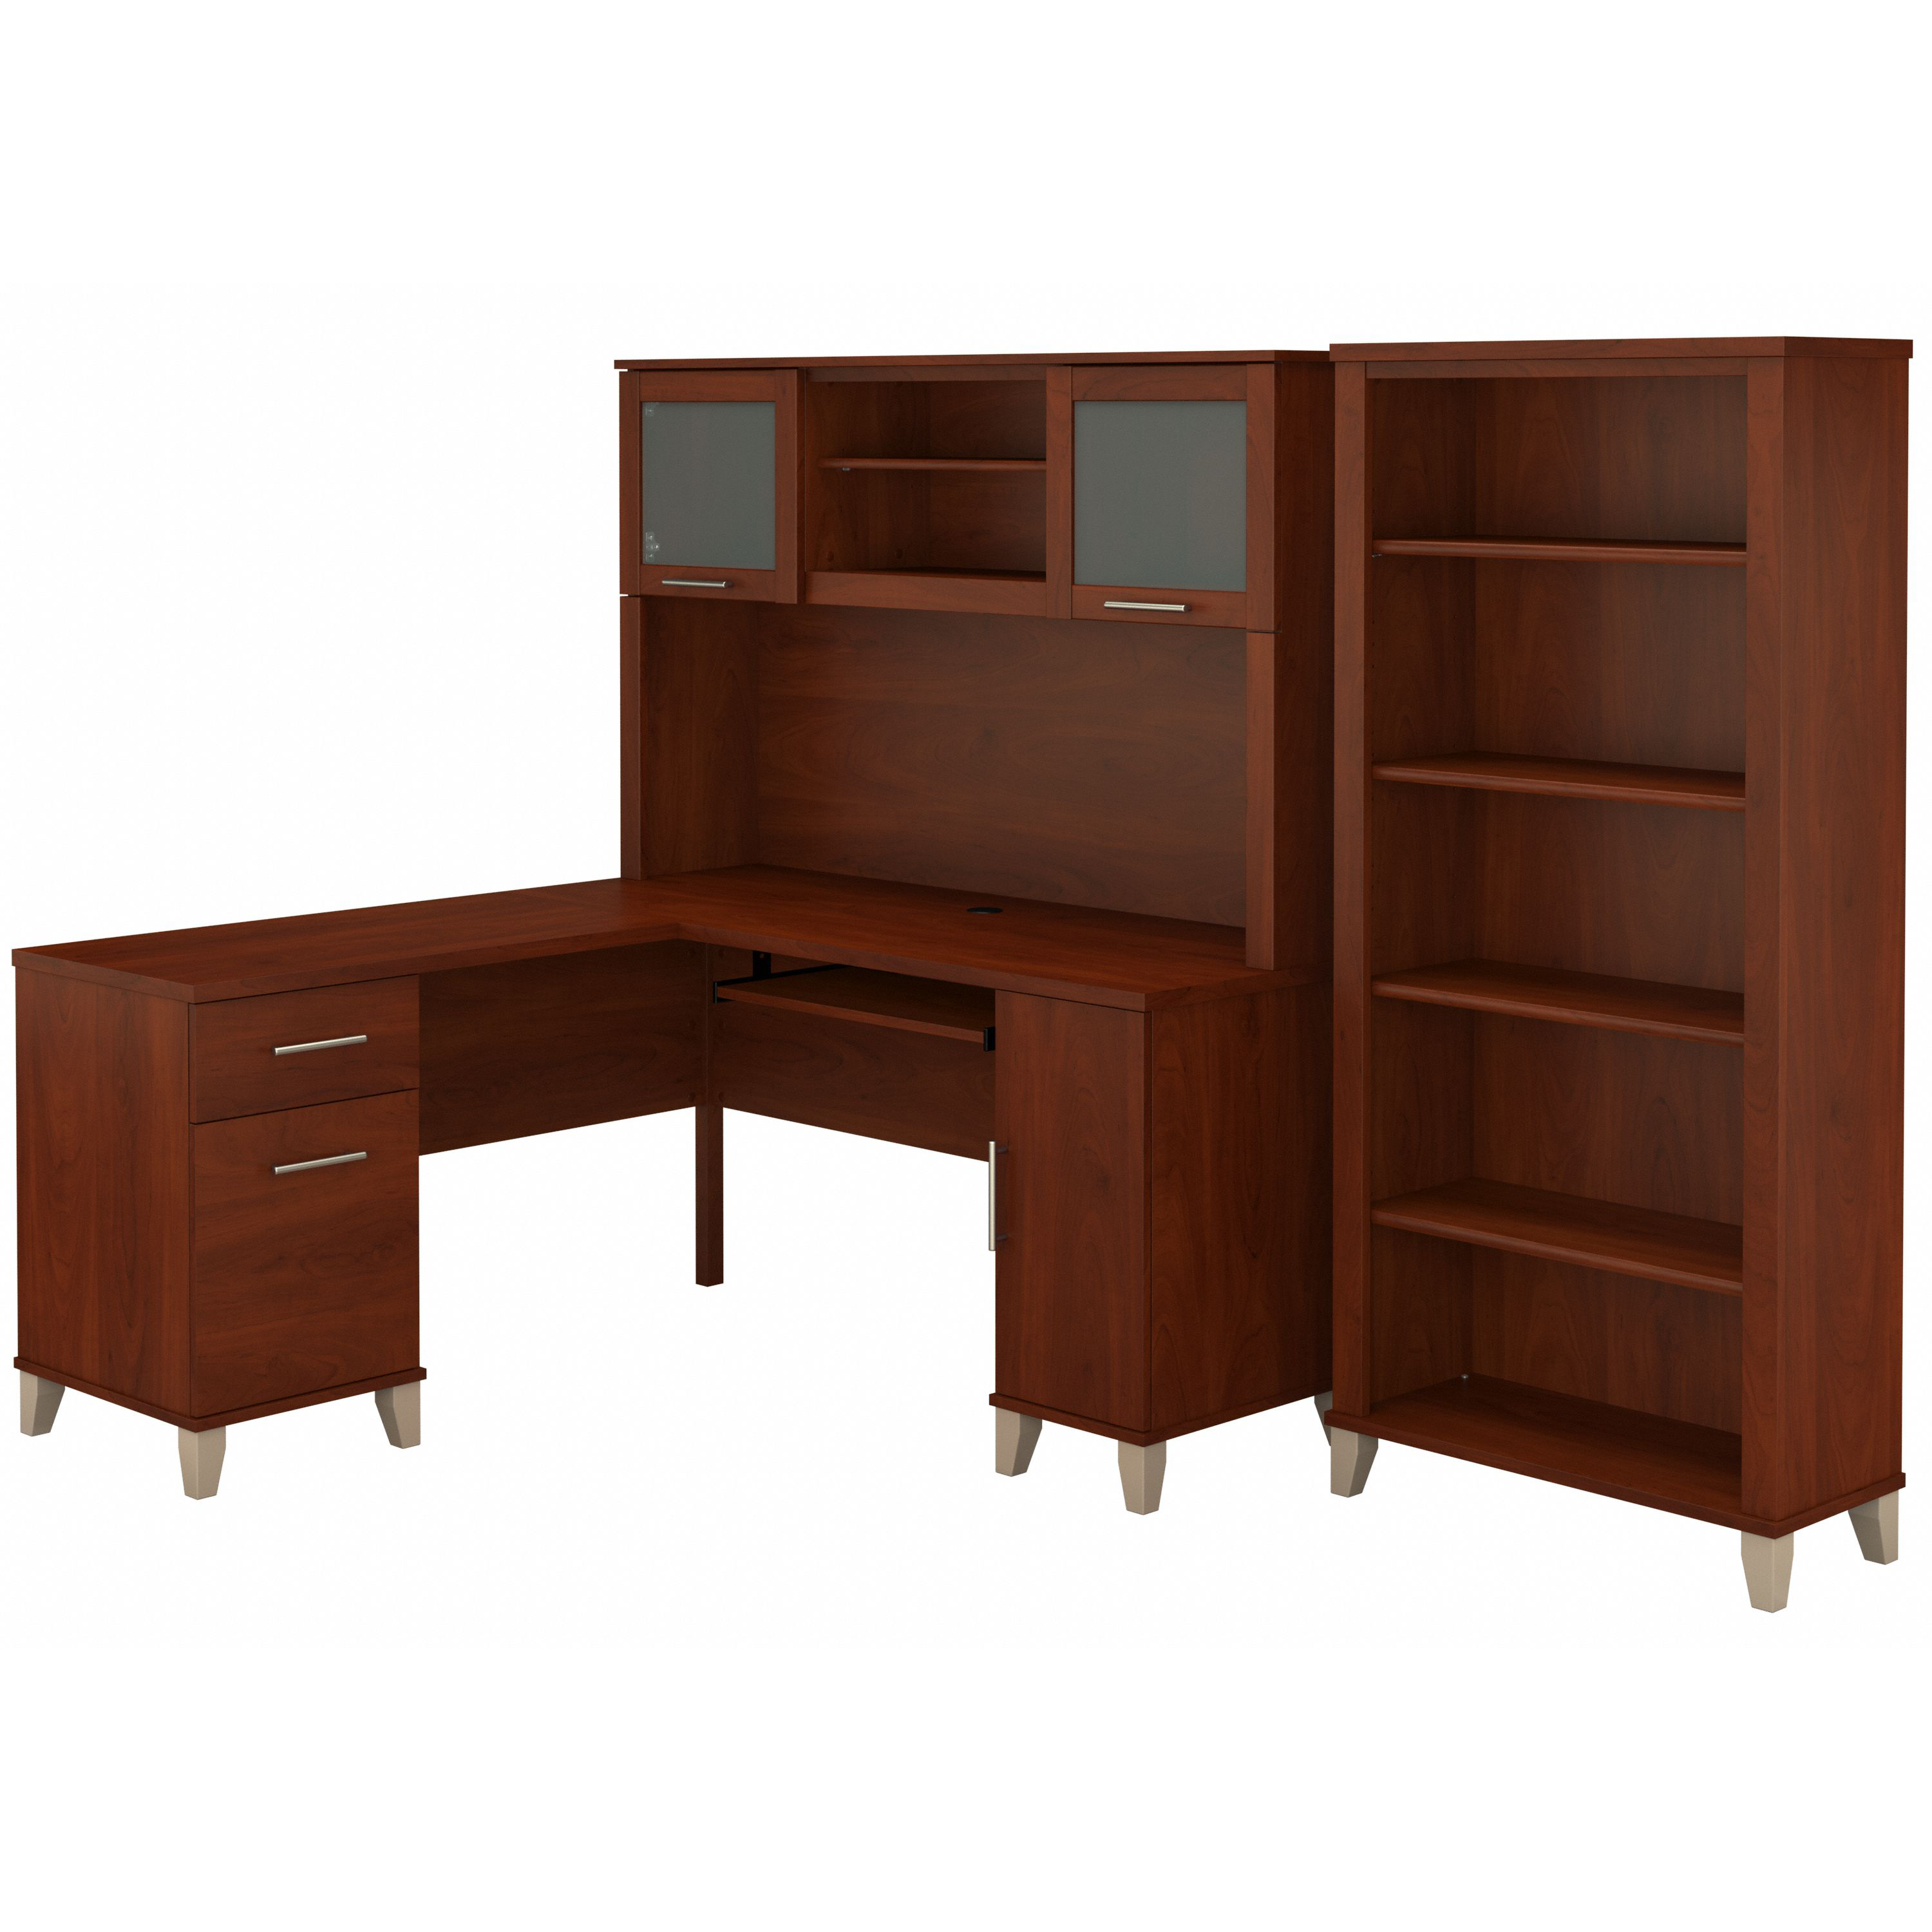 Shop Bush Furniture Somerset 60W L Shaped Desk with Hutch and 5 Shelf Bookcase 02 SET010HC #color_hansen cherry